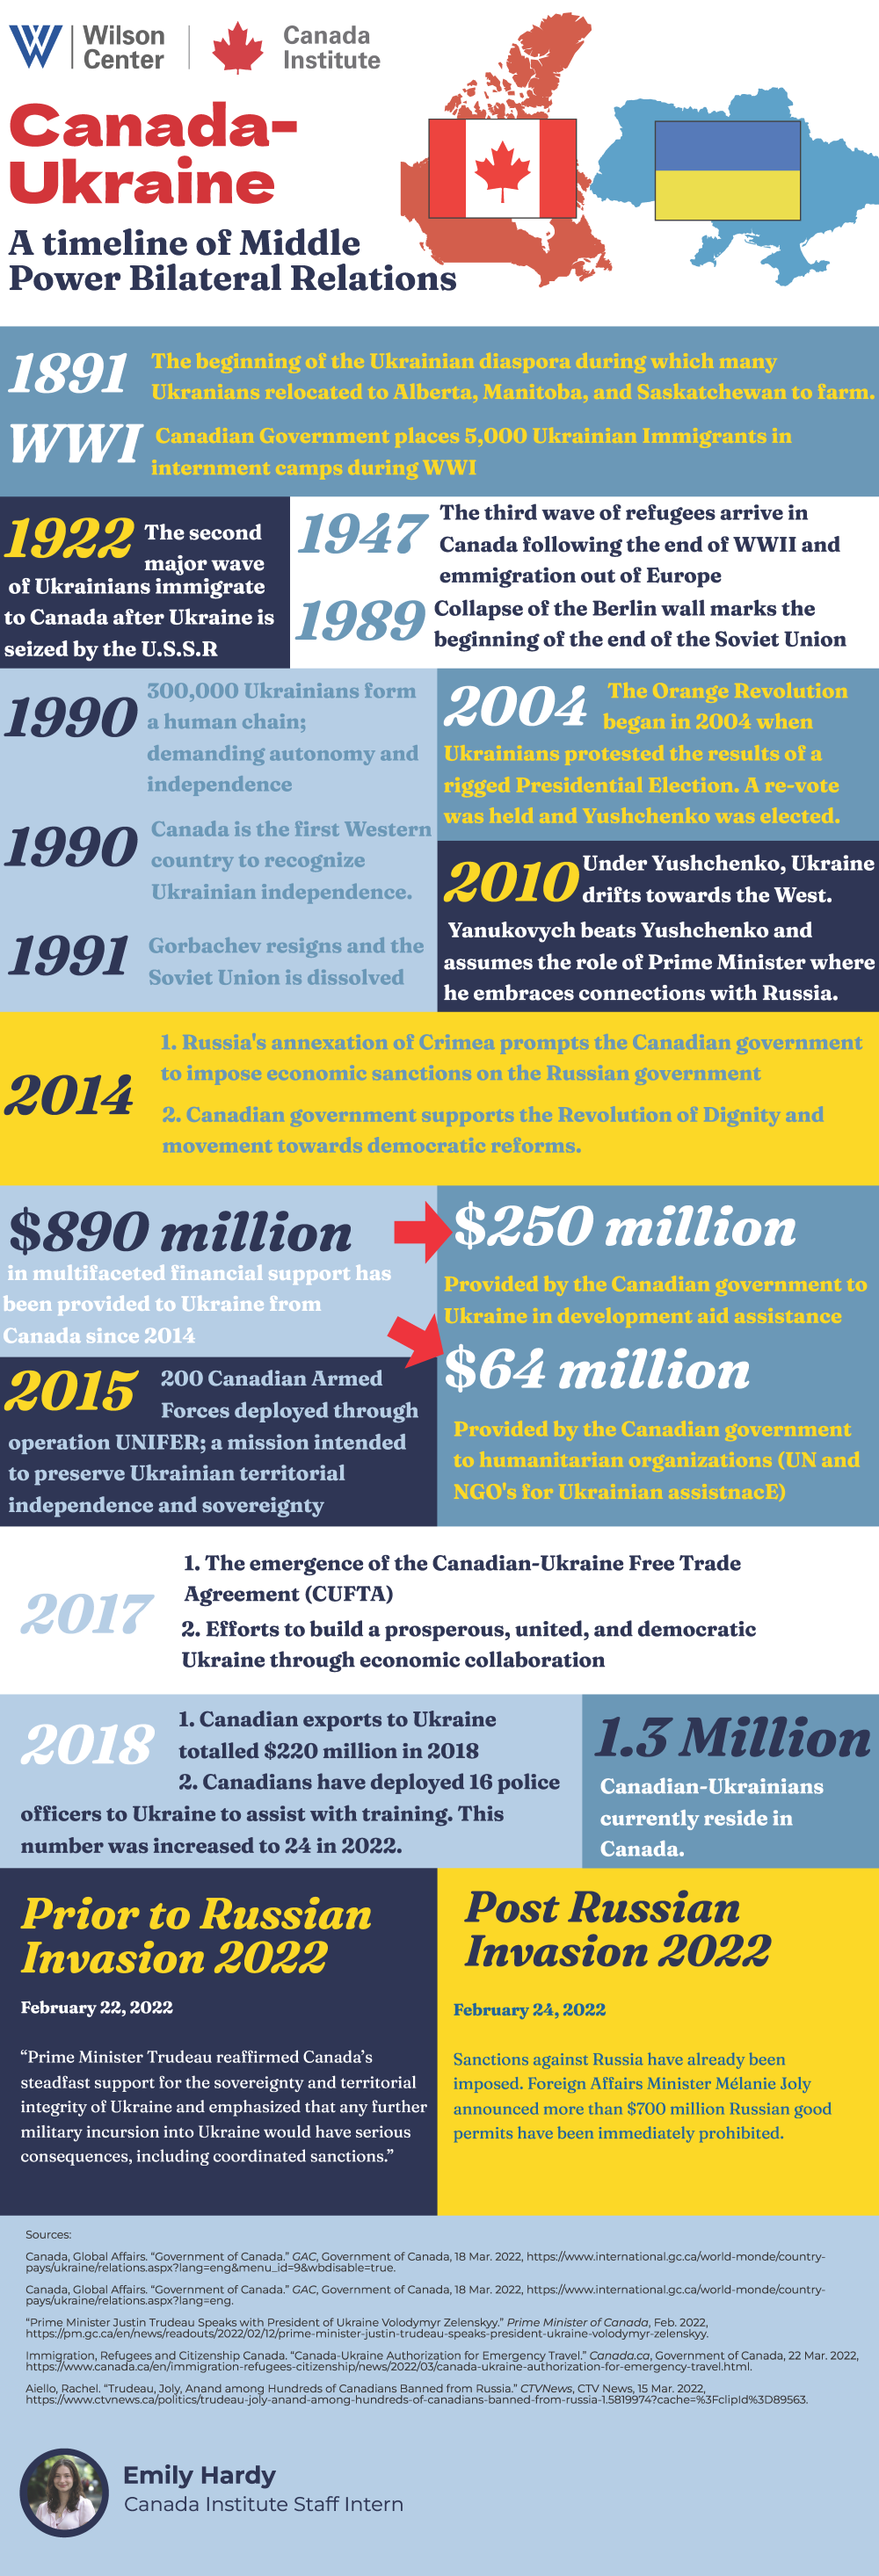 Infographic timeline of Canada-Ukraine ties